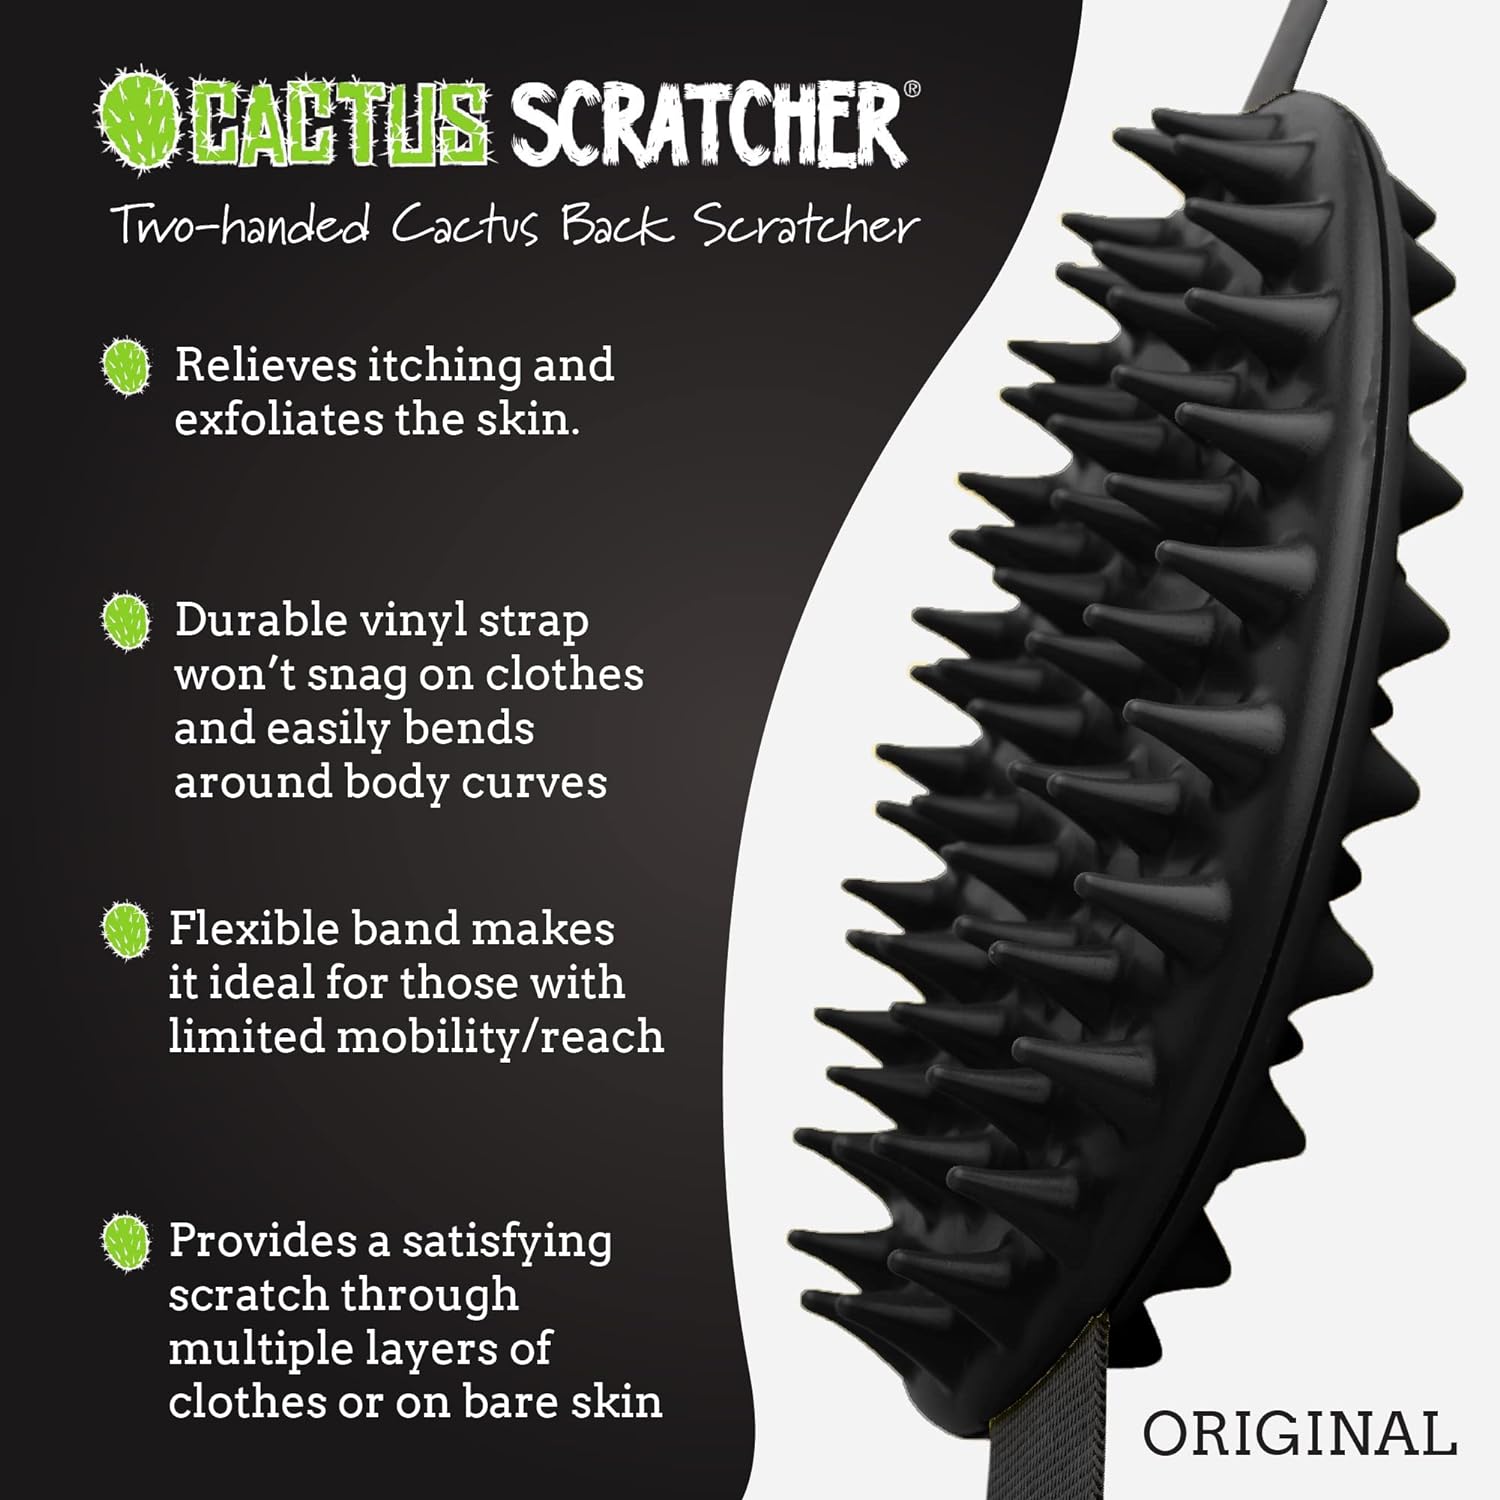 Cactus Back Scratcher